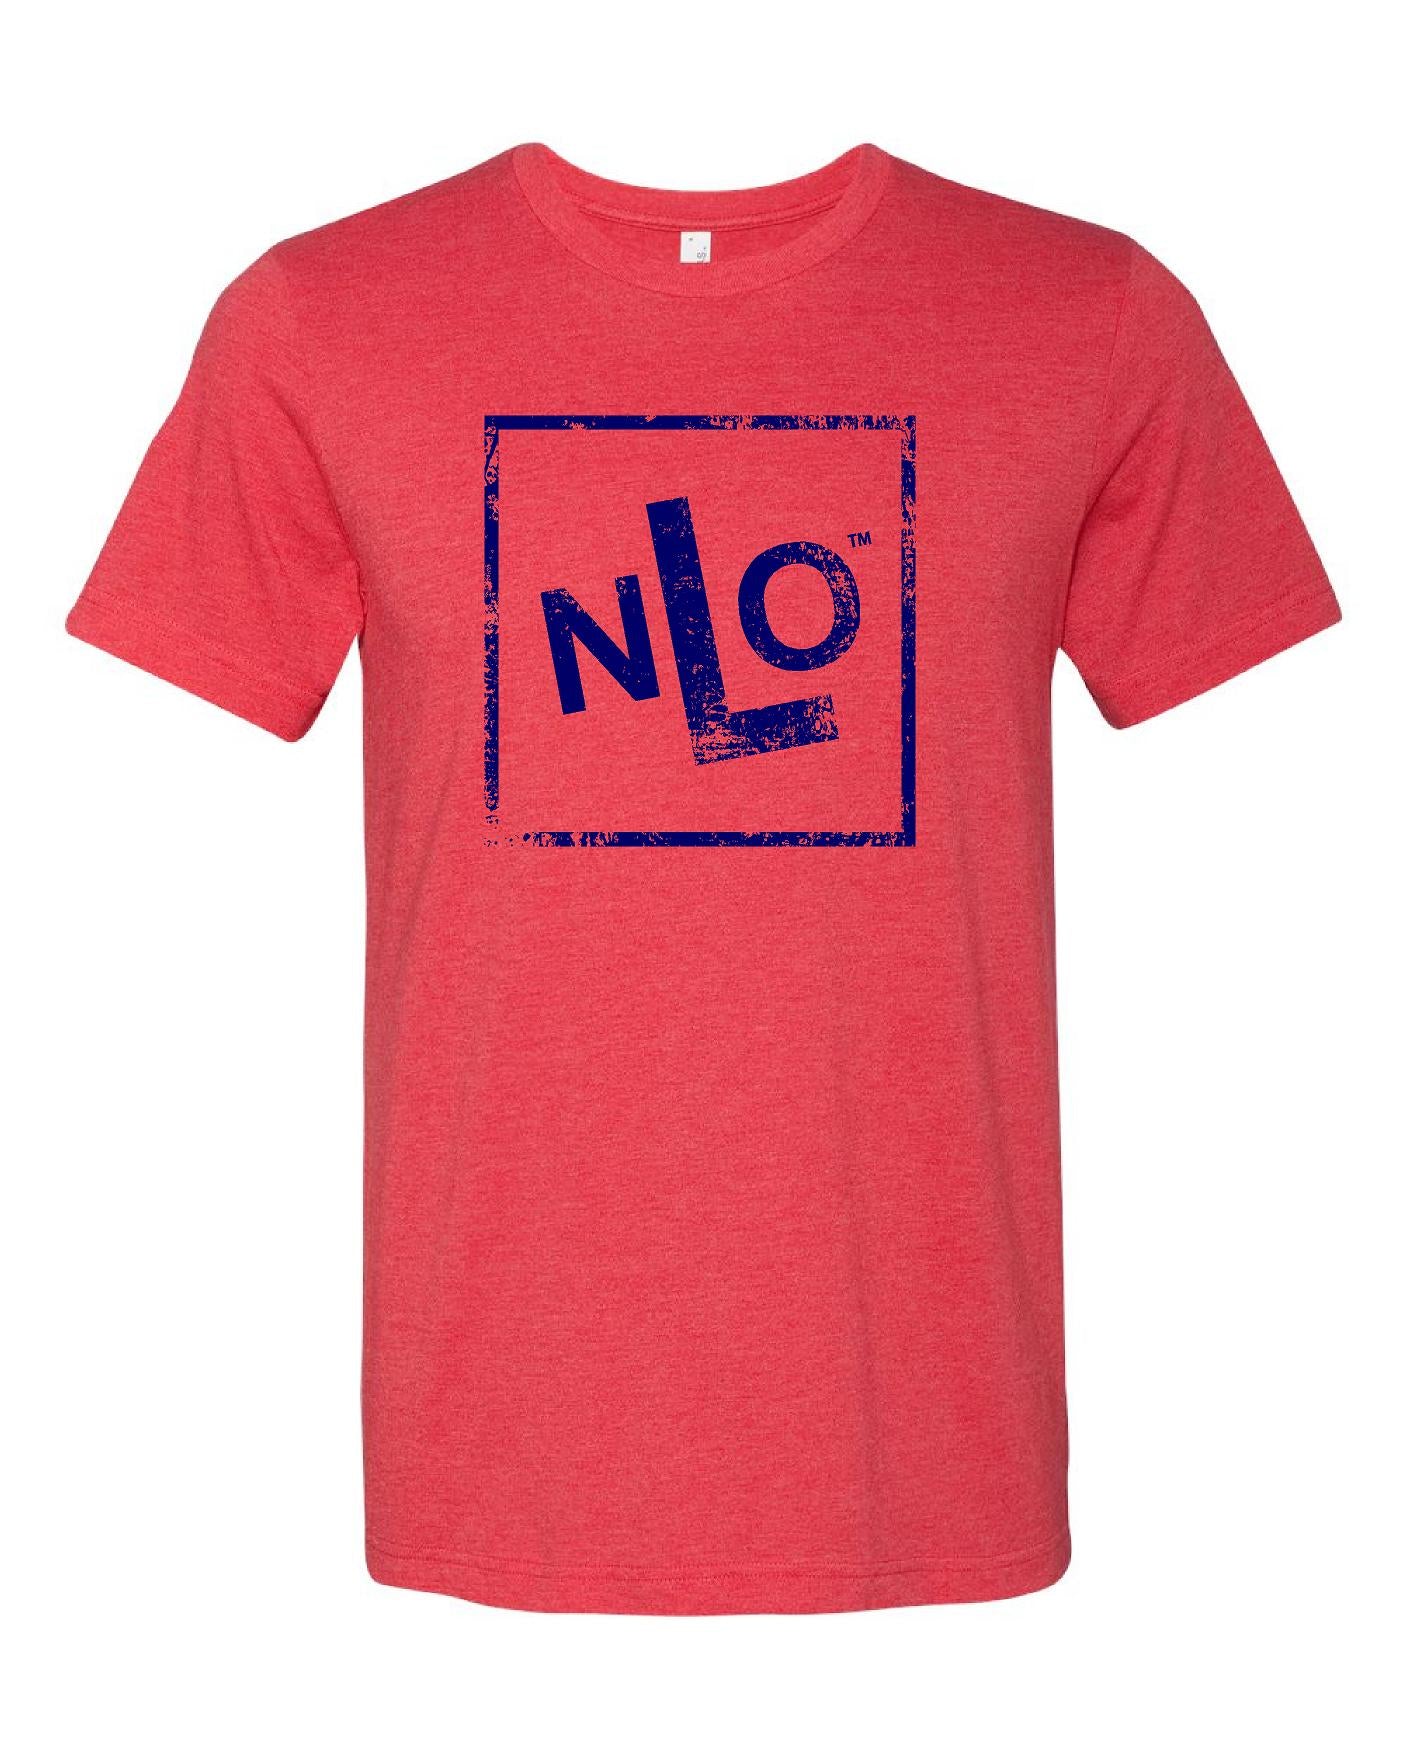 NLO Short Sleeve T-Shirt